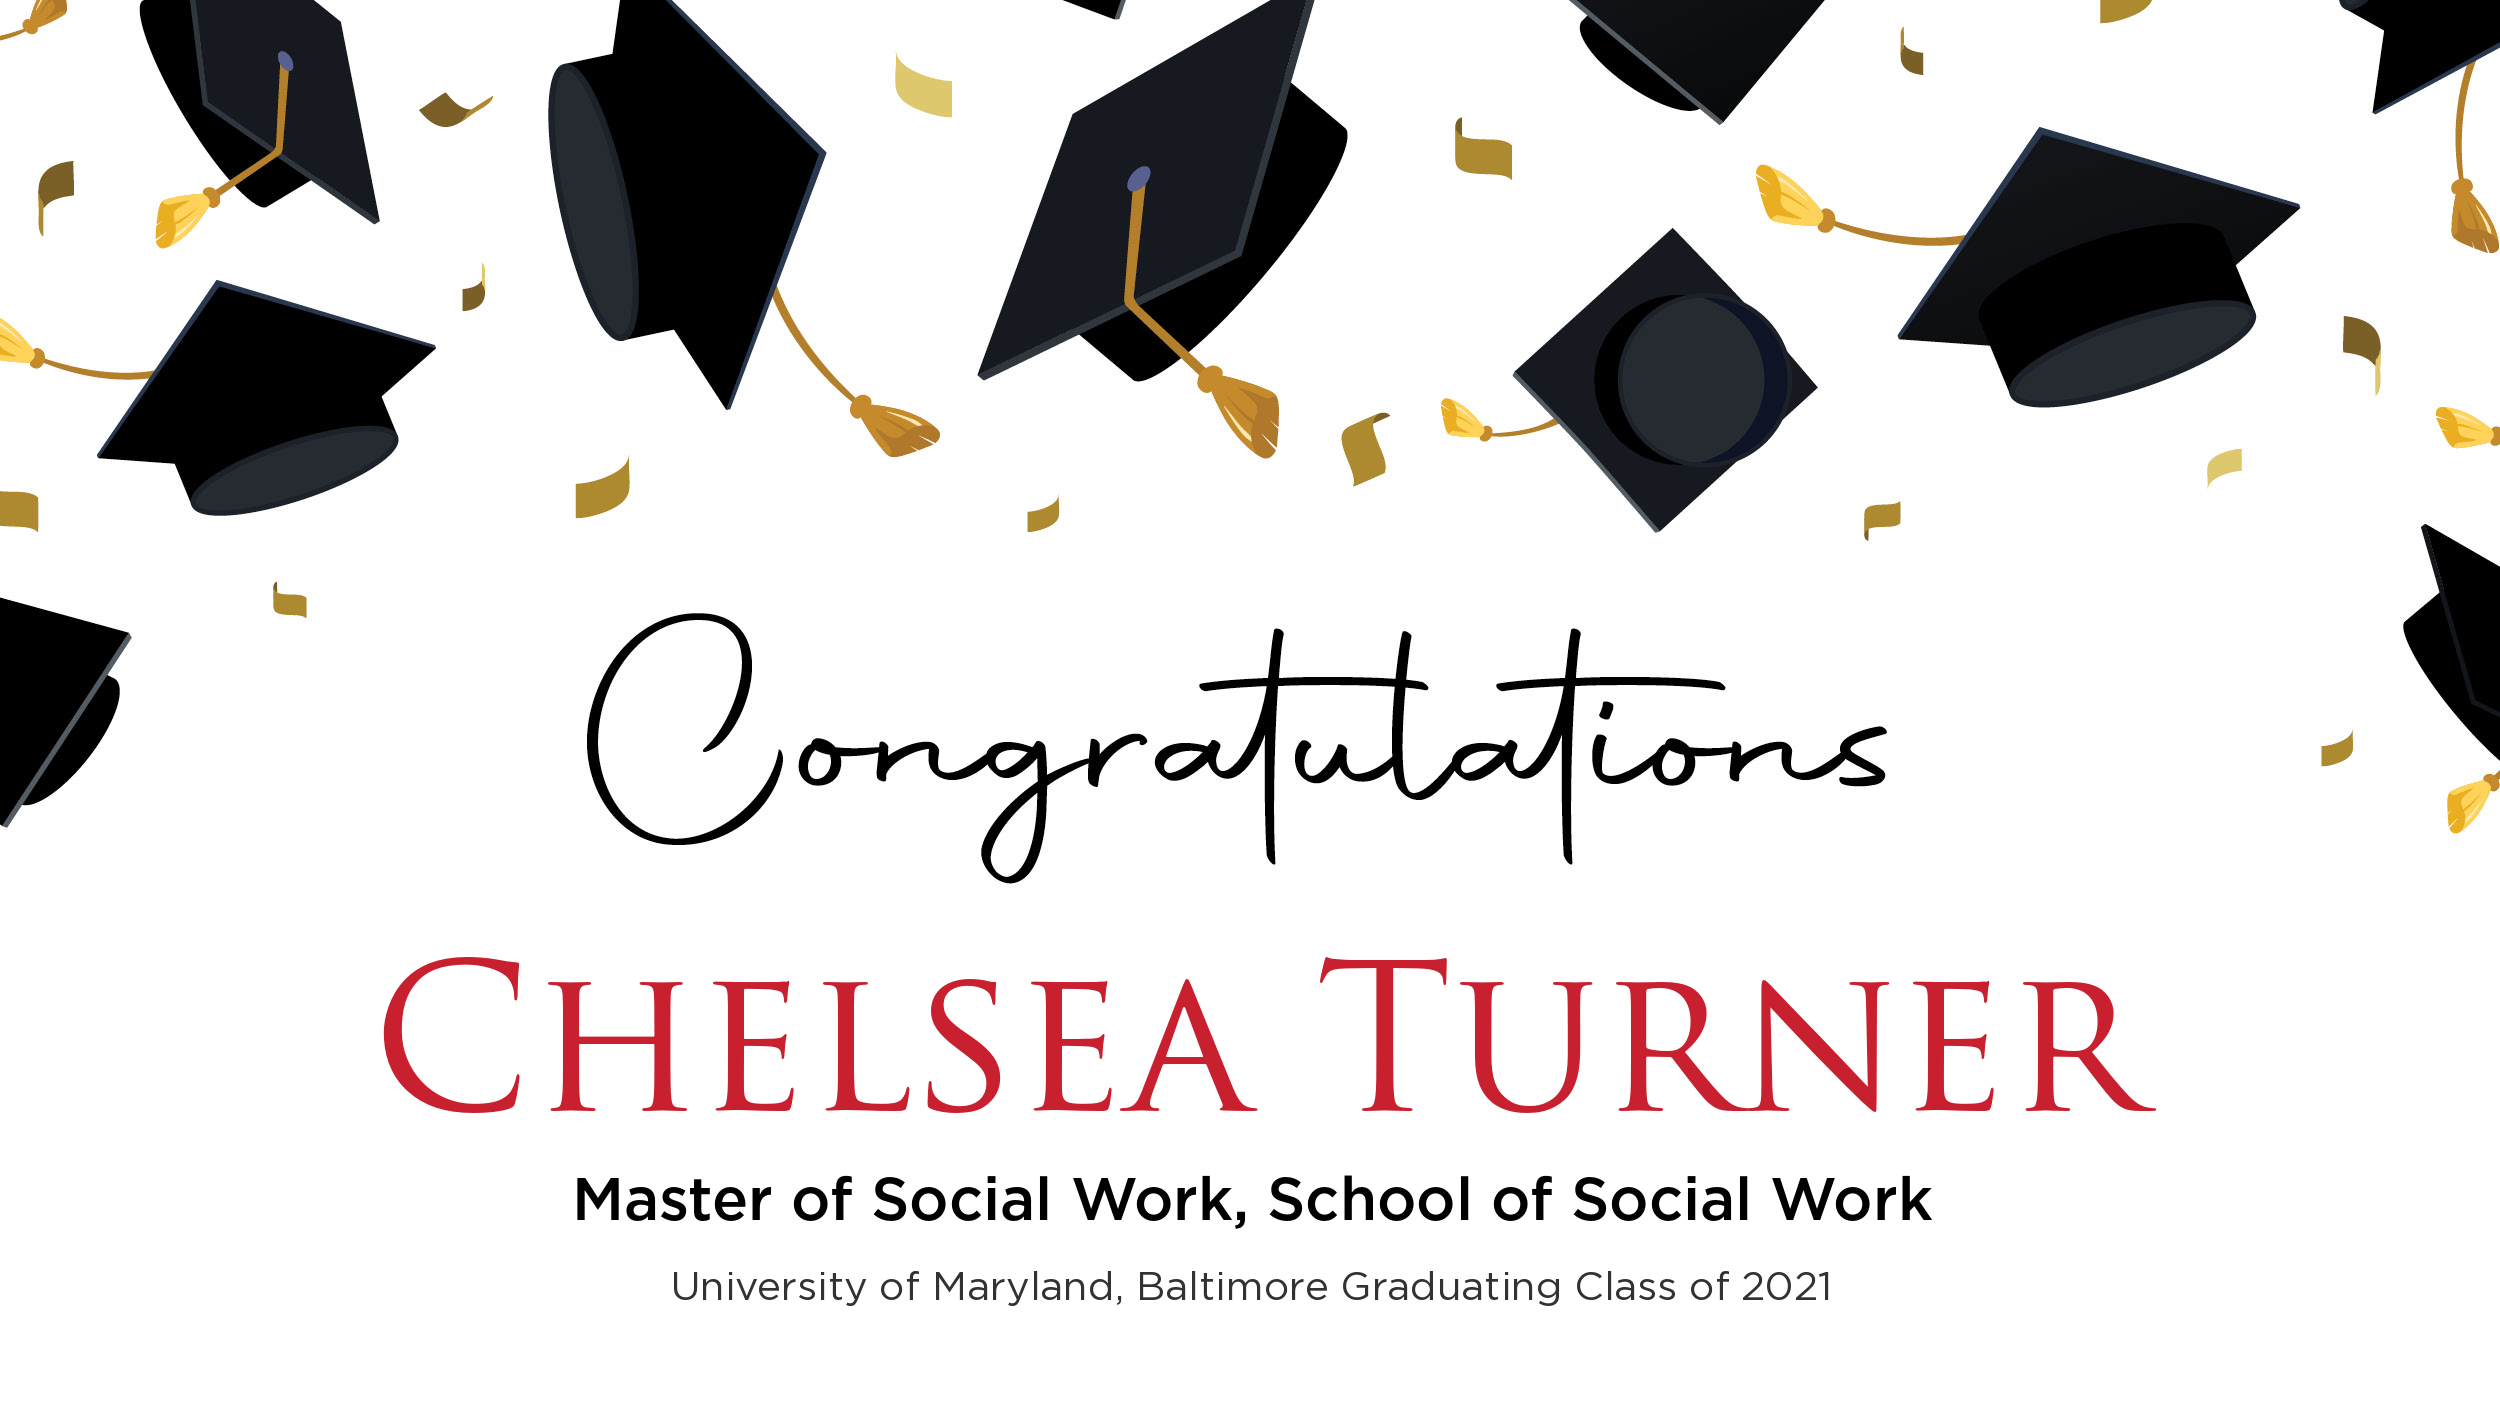 Congratulations Chelsea Turner, Master of Social Work